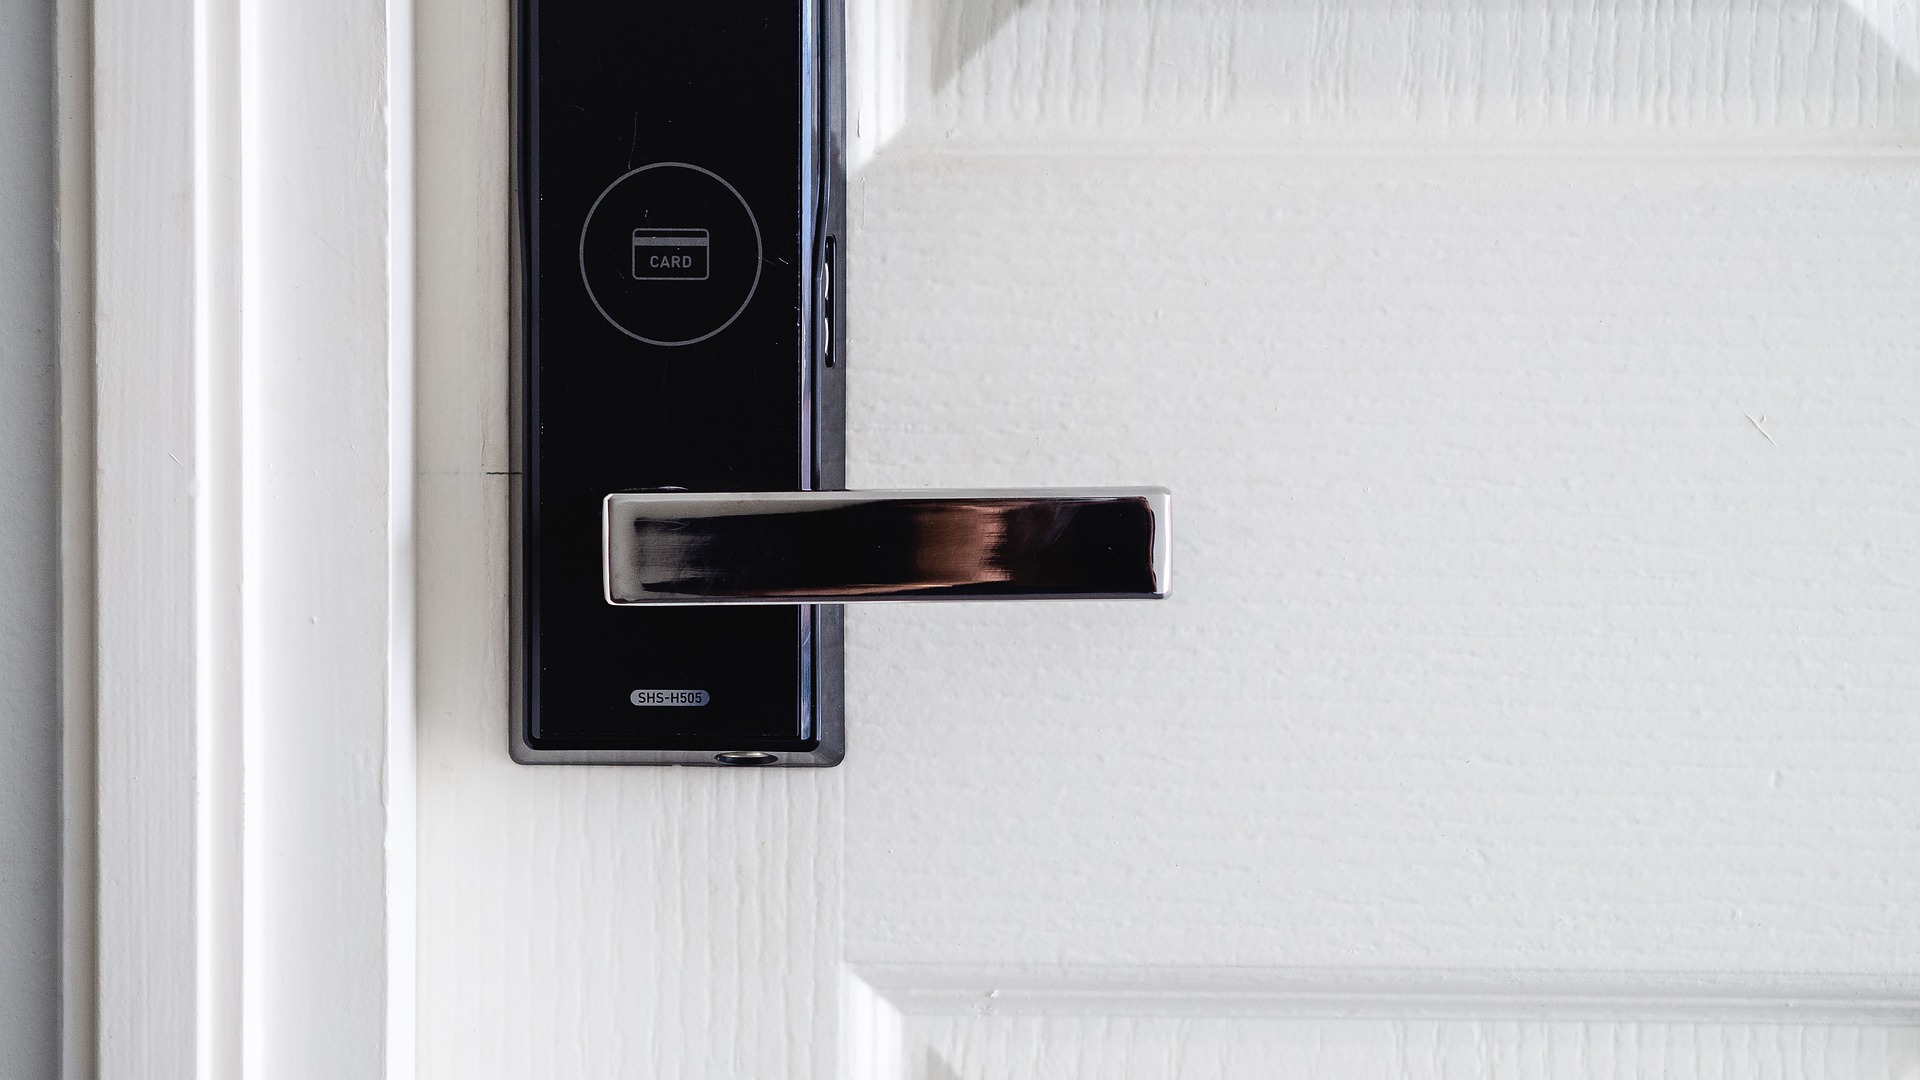 Nuki Smart Lock - Keyless electronic door lock for smart access